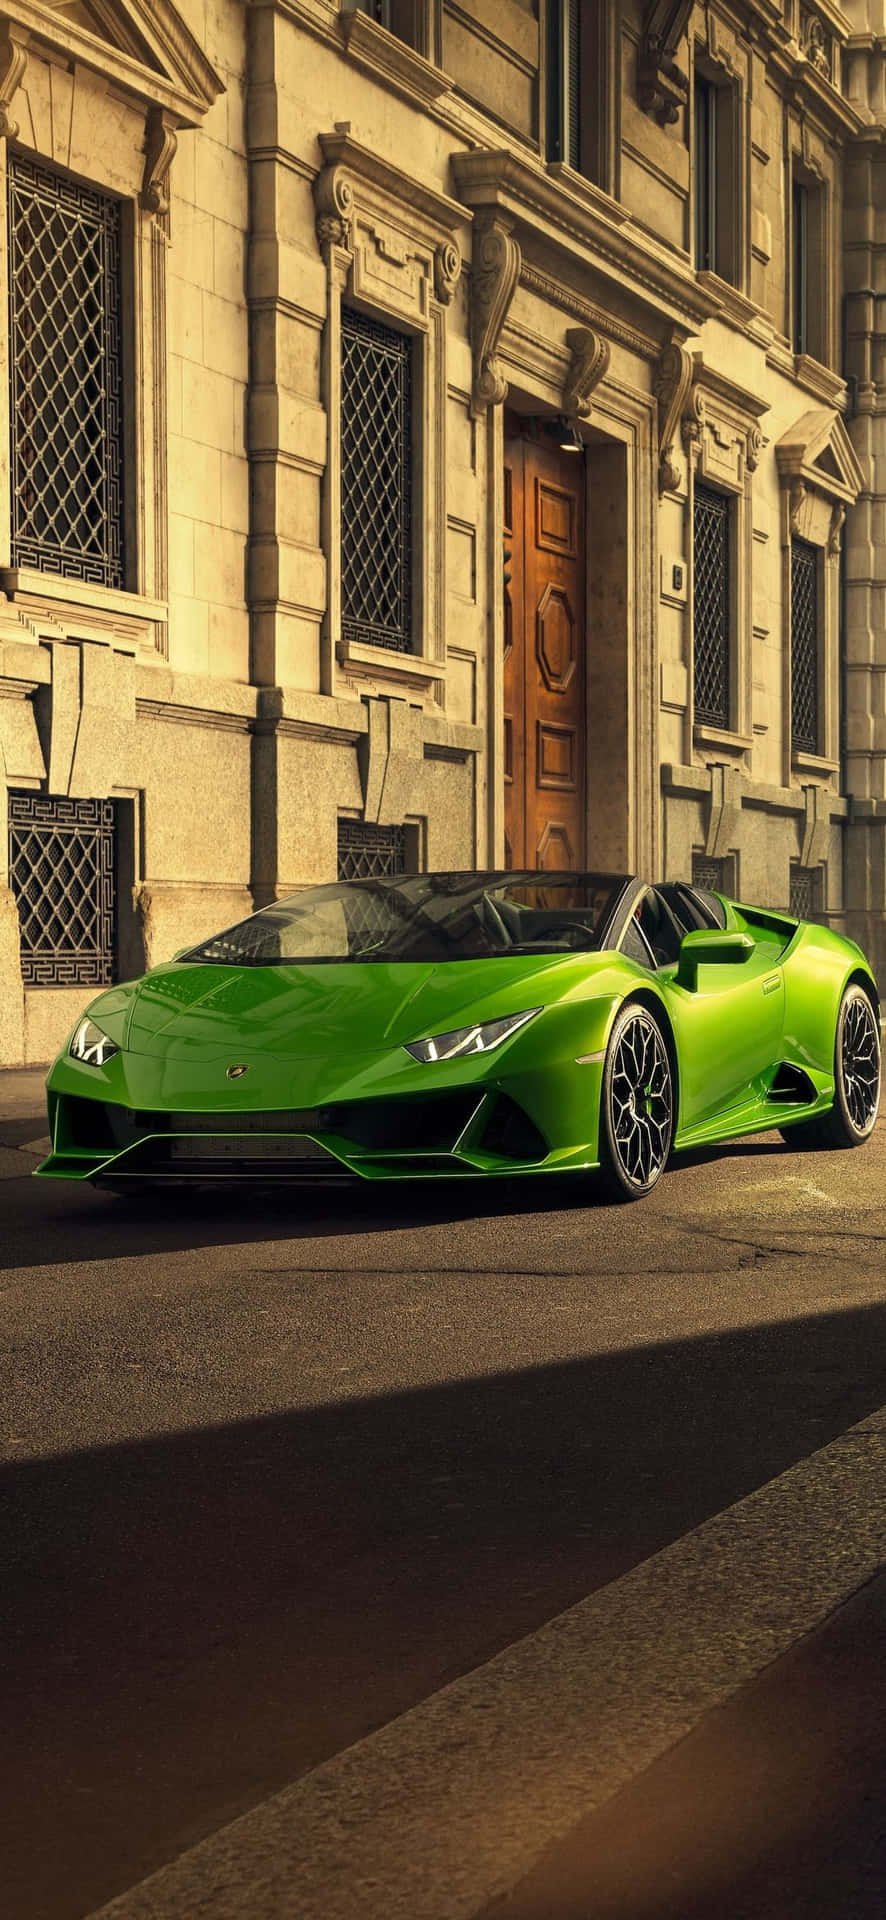 Erlebensie Den Nervenkitzel, Einen Lamborghini Mit Dem Google Pixel 3xl Zu Fahren.